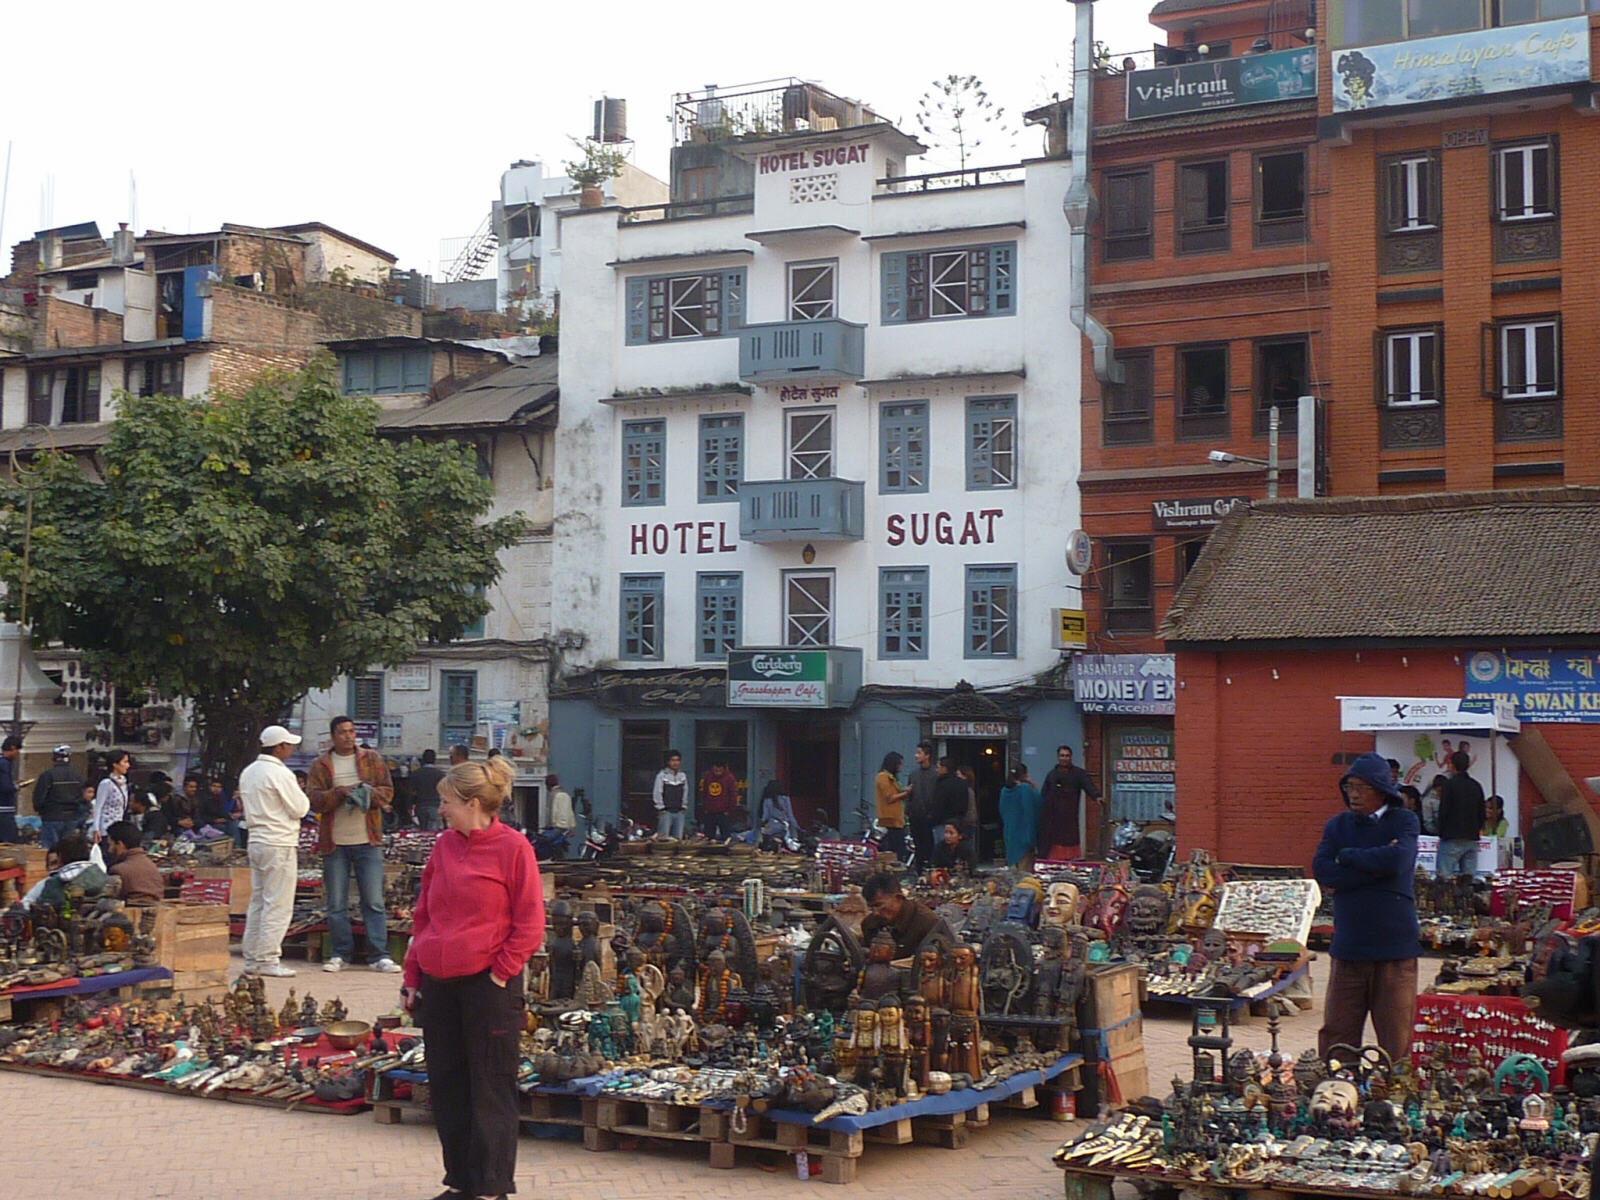 Sugat hotel in Durbar Square, Kathmandu